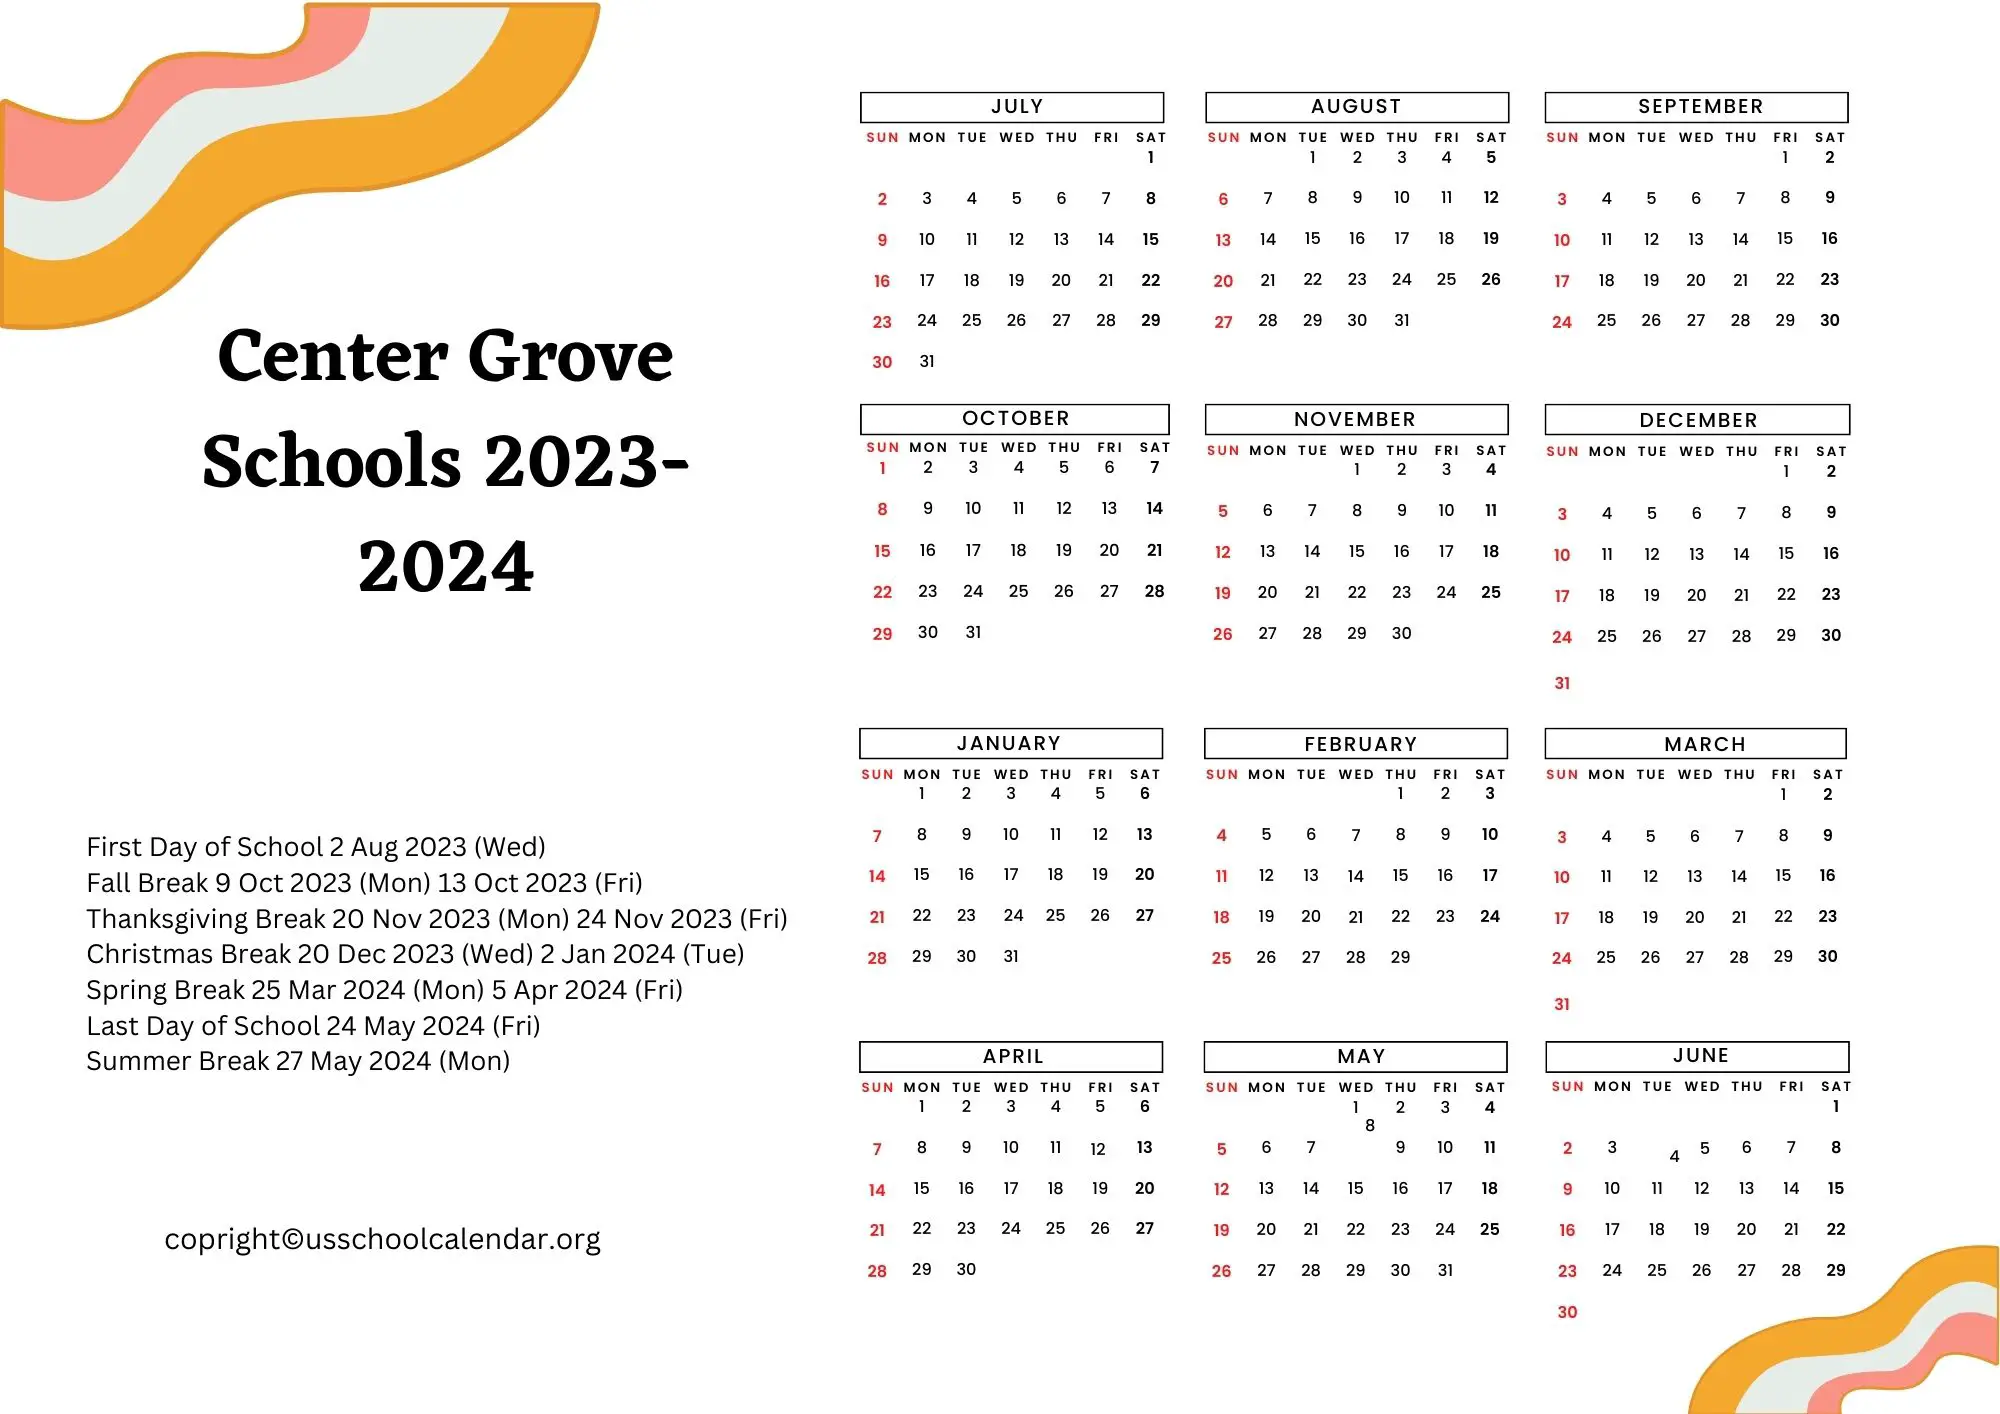 Center Grove Schools Calendar with Holidays 20232024